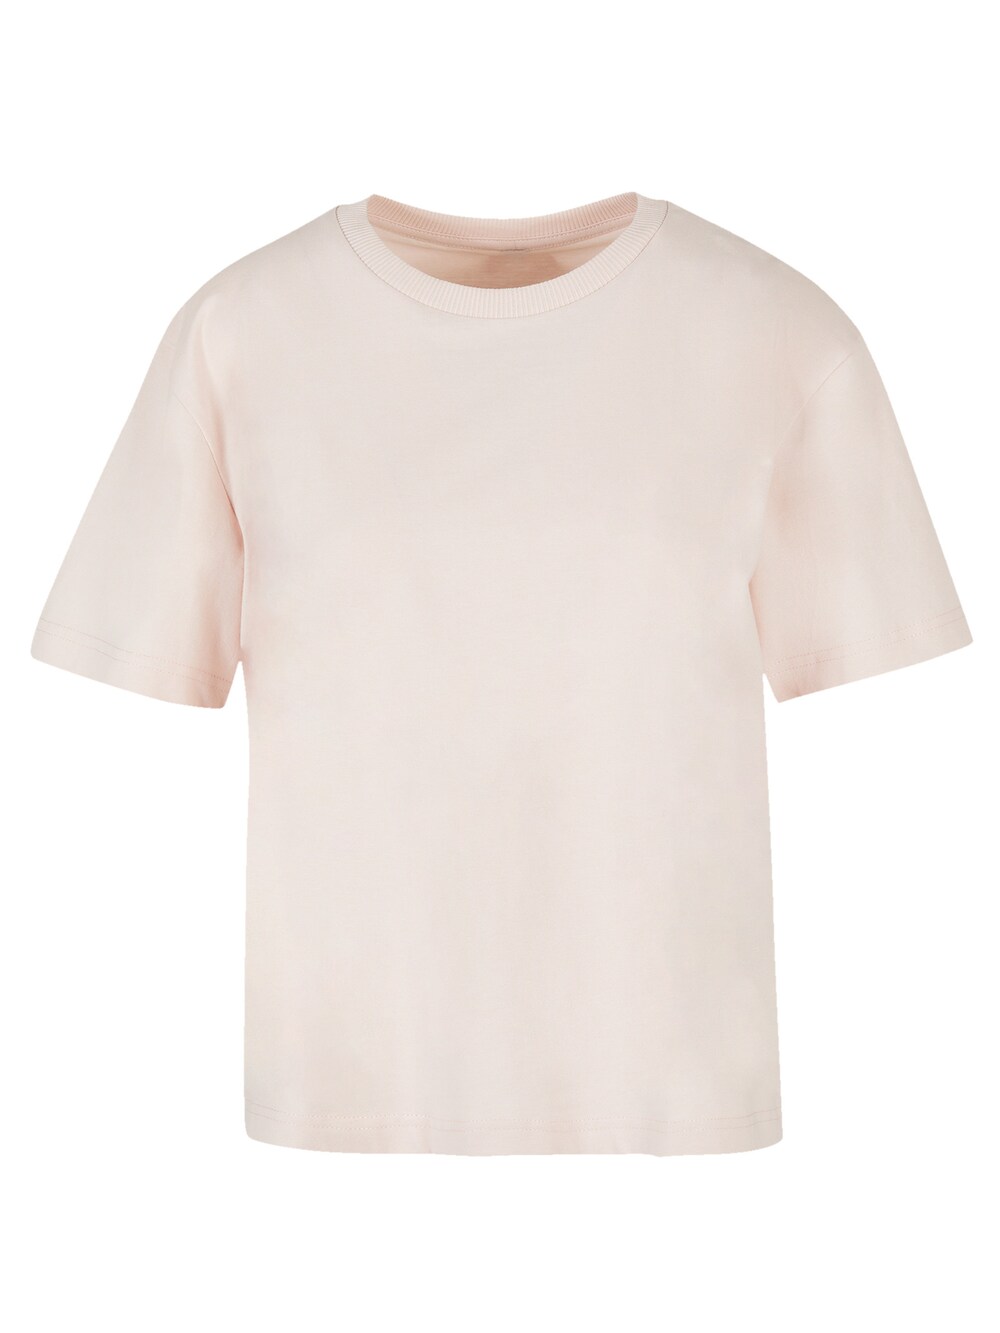 Рубашка F4Nt4Stic, розовый/светло-розовый